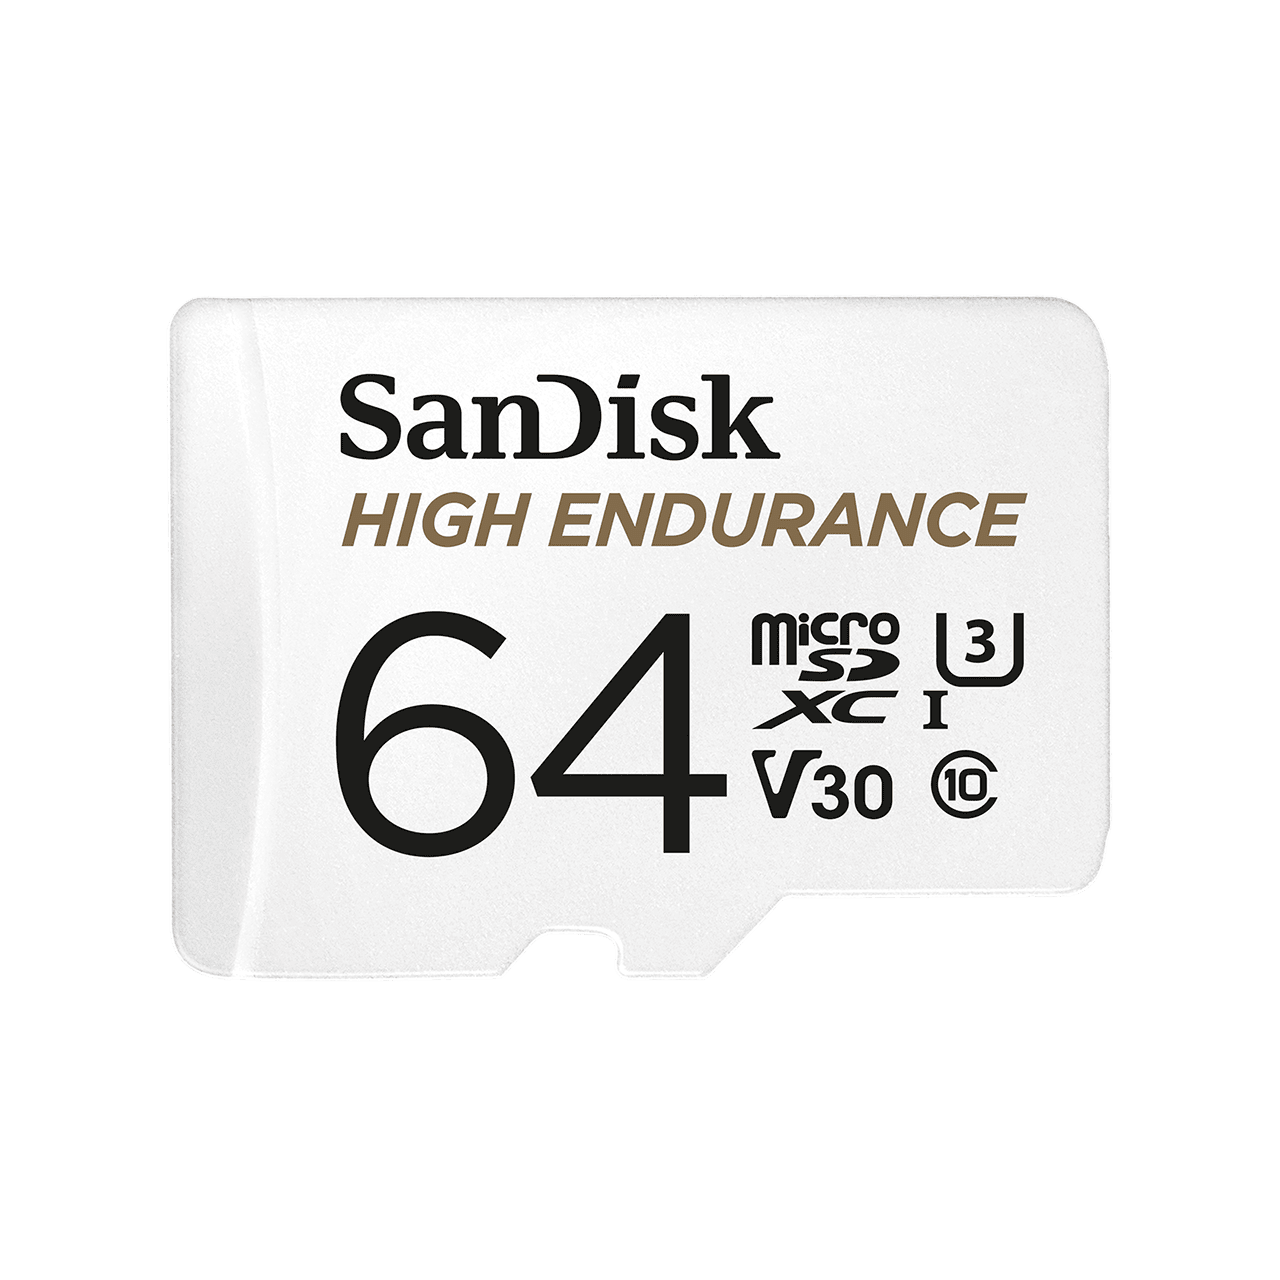 SanDisk® High Endurance microSD™ Card 64GB - Image2